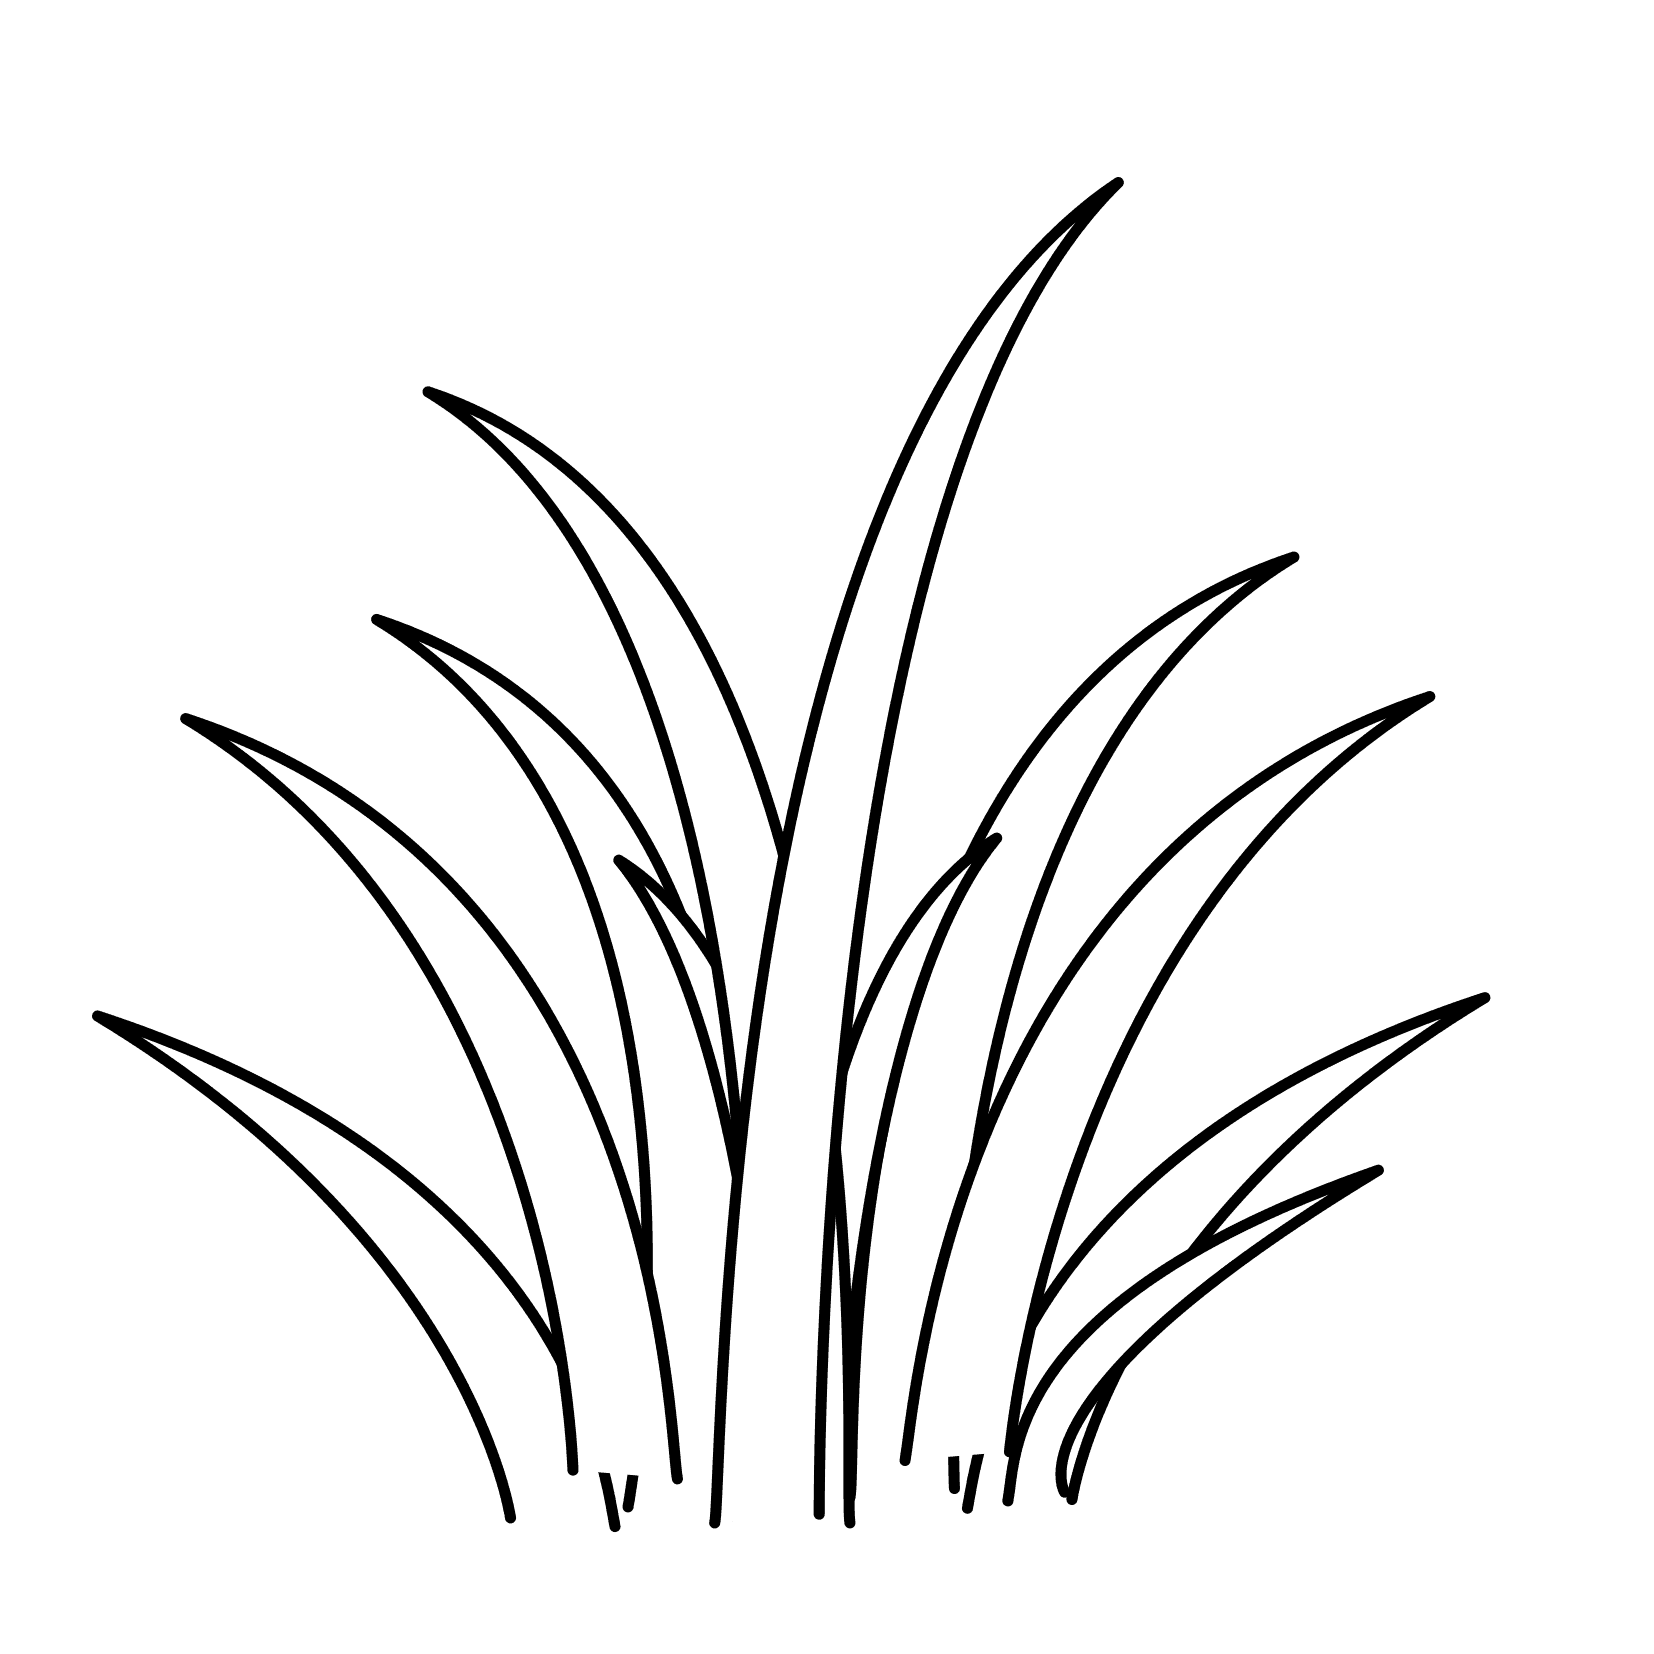 Grass Clip Art to Download - dbclipart.com